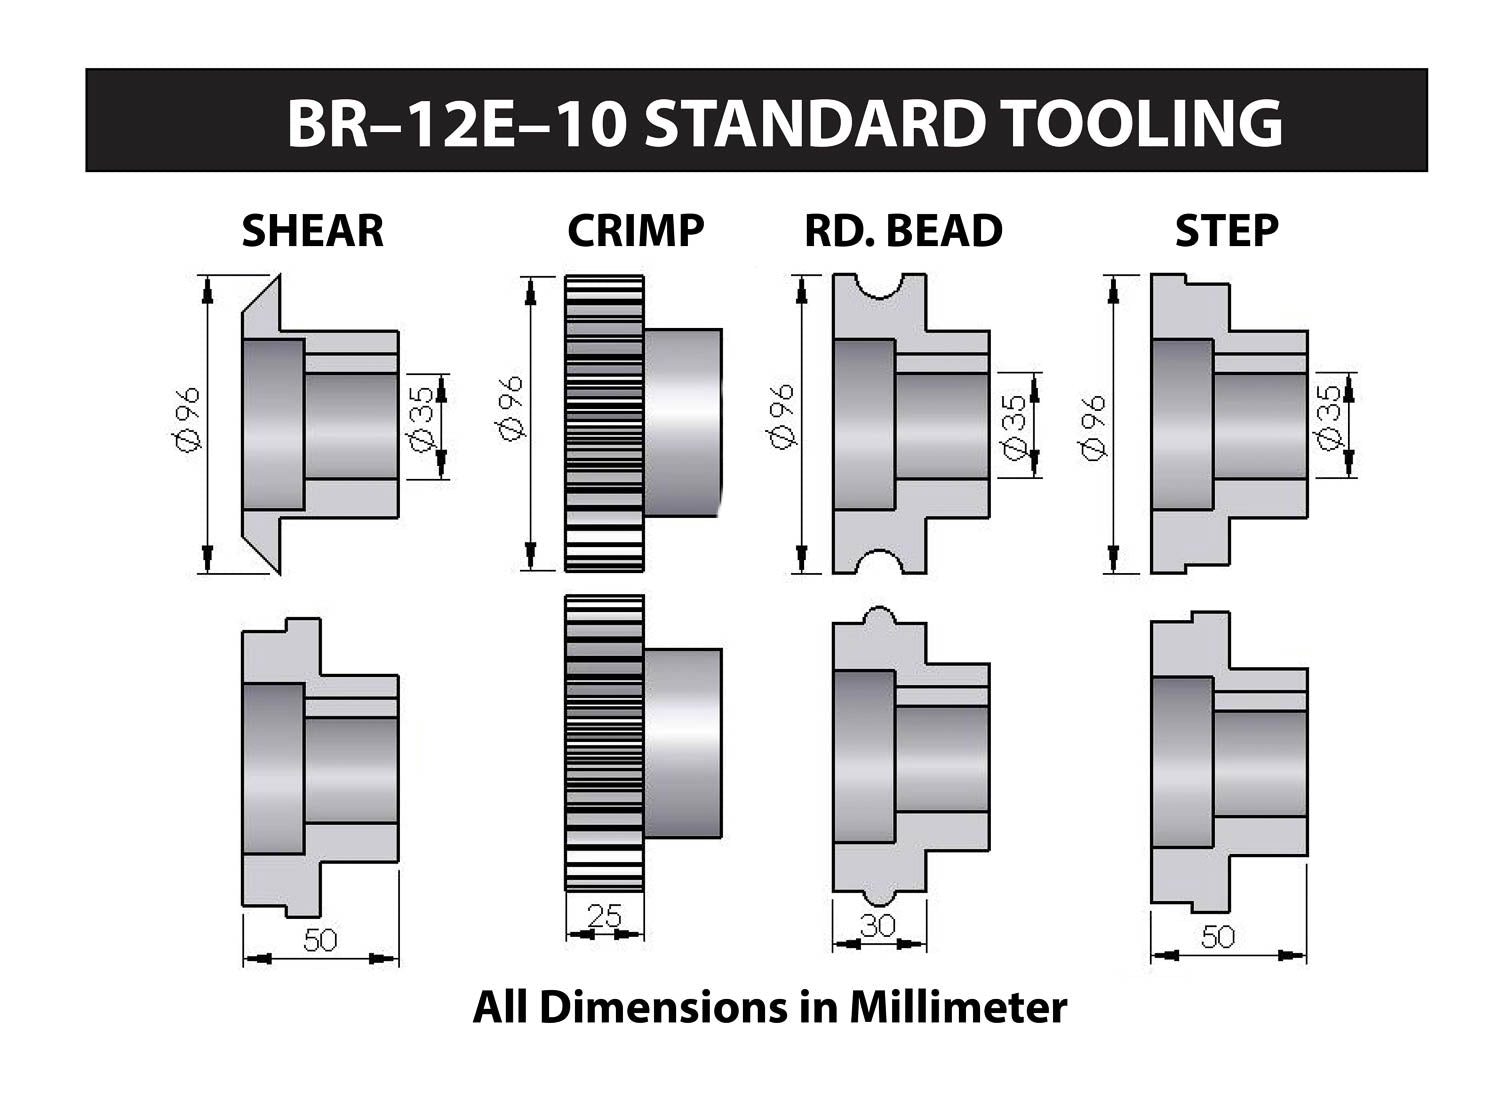 Baileigh BR-12E-10 220V 1 Phase , 10" Throat Depth Bead Roller for 12 Gauge Mild Steel, Includes 4 Sets of Rolls